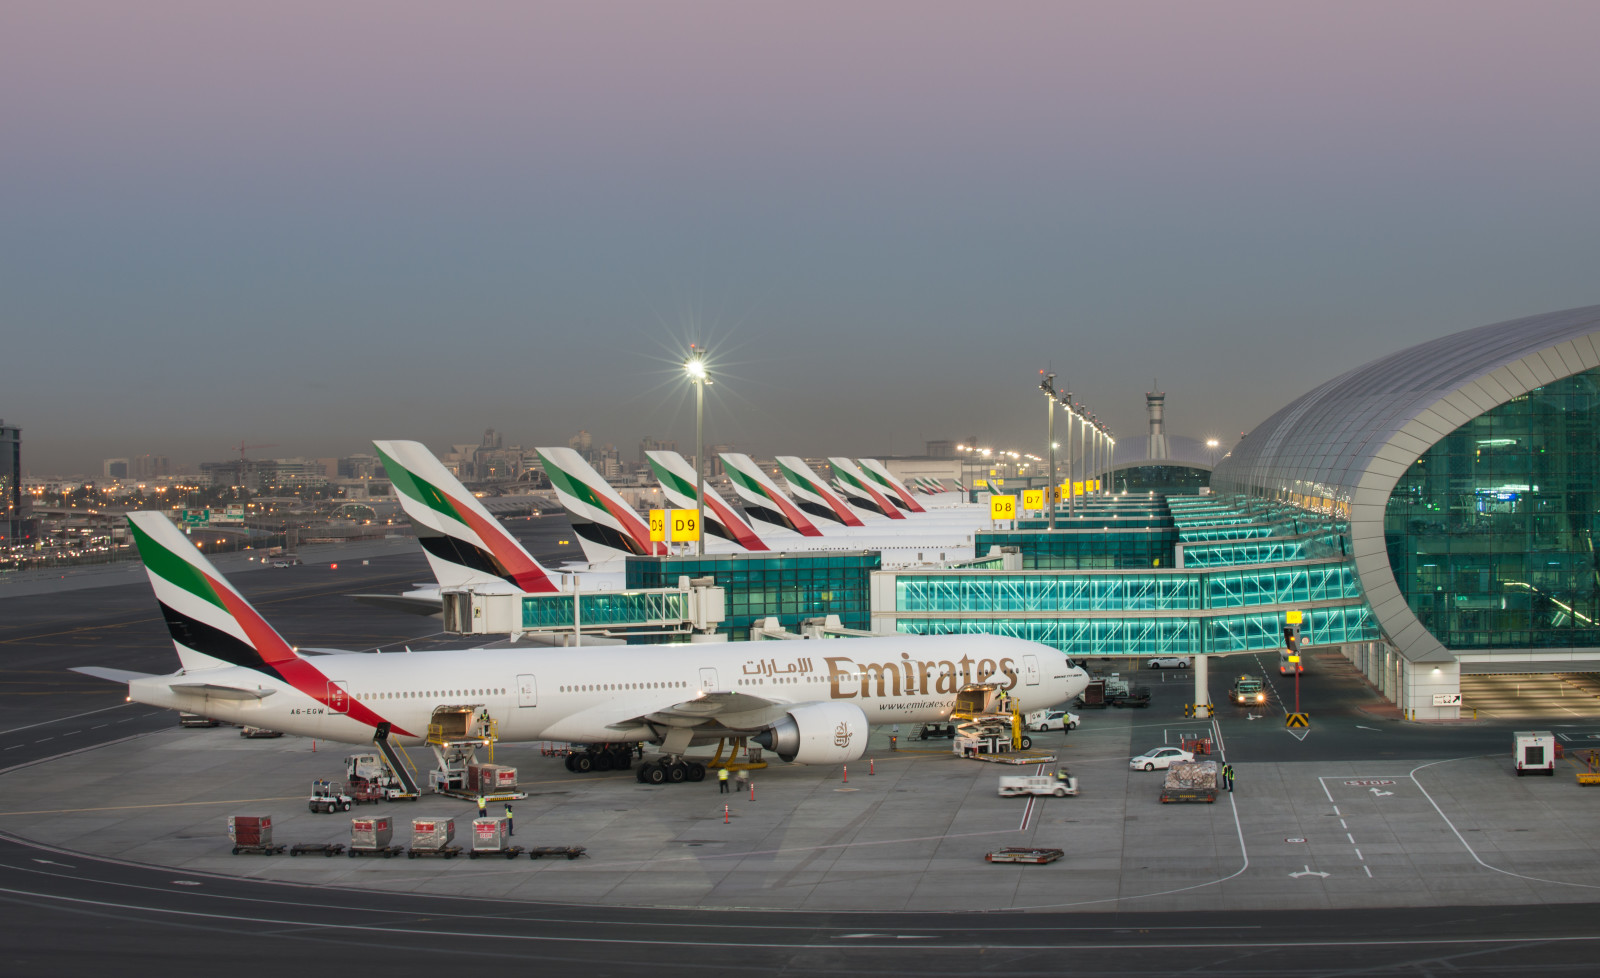 DUBAI AIRPORT STILL WORLD LEADER ON PASSENGER TRAFFIC